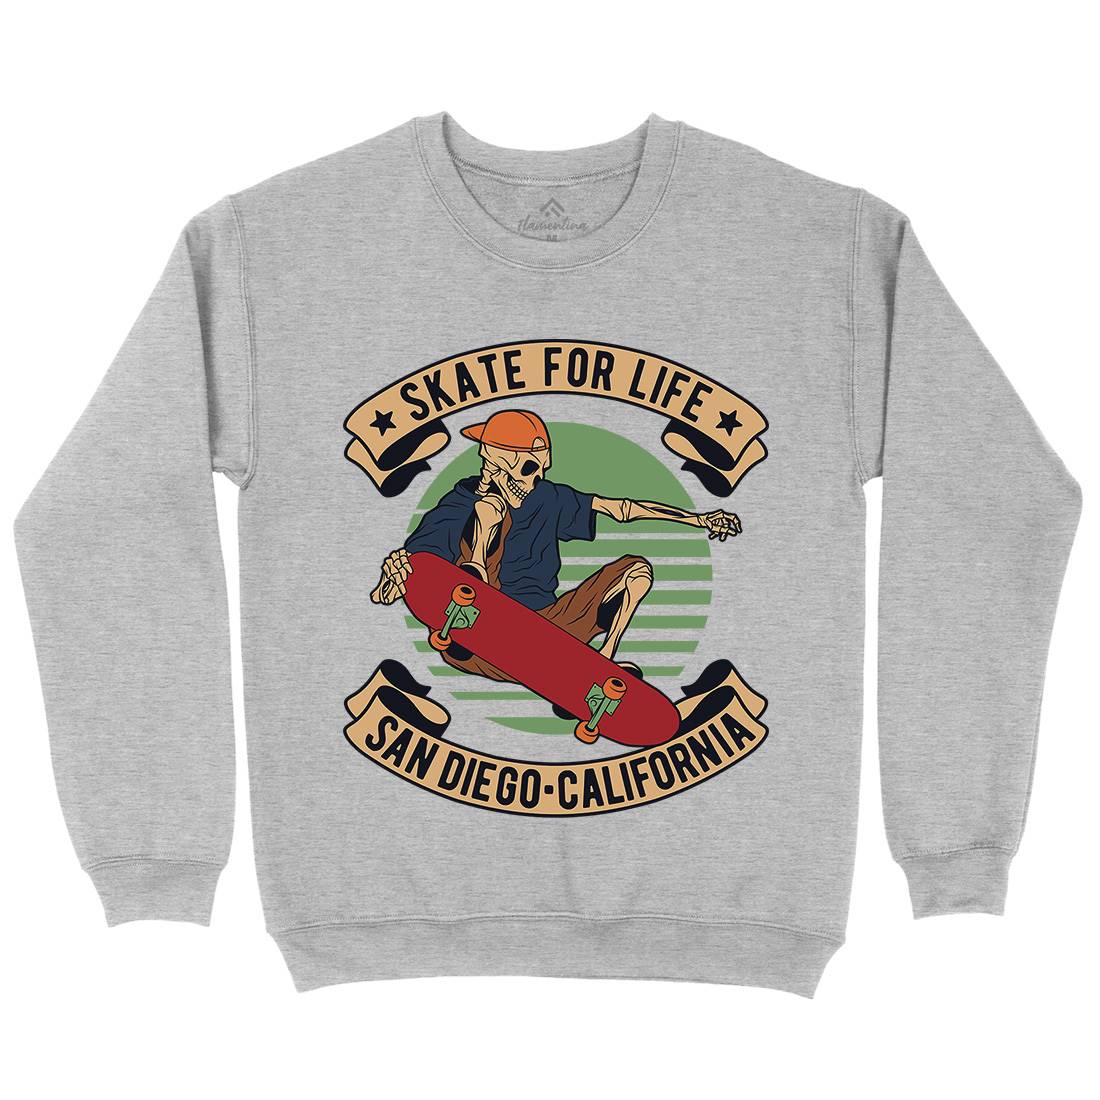 For Life Mens Crew Neck Sweatshirt Skate D970